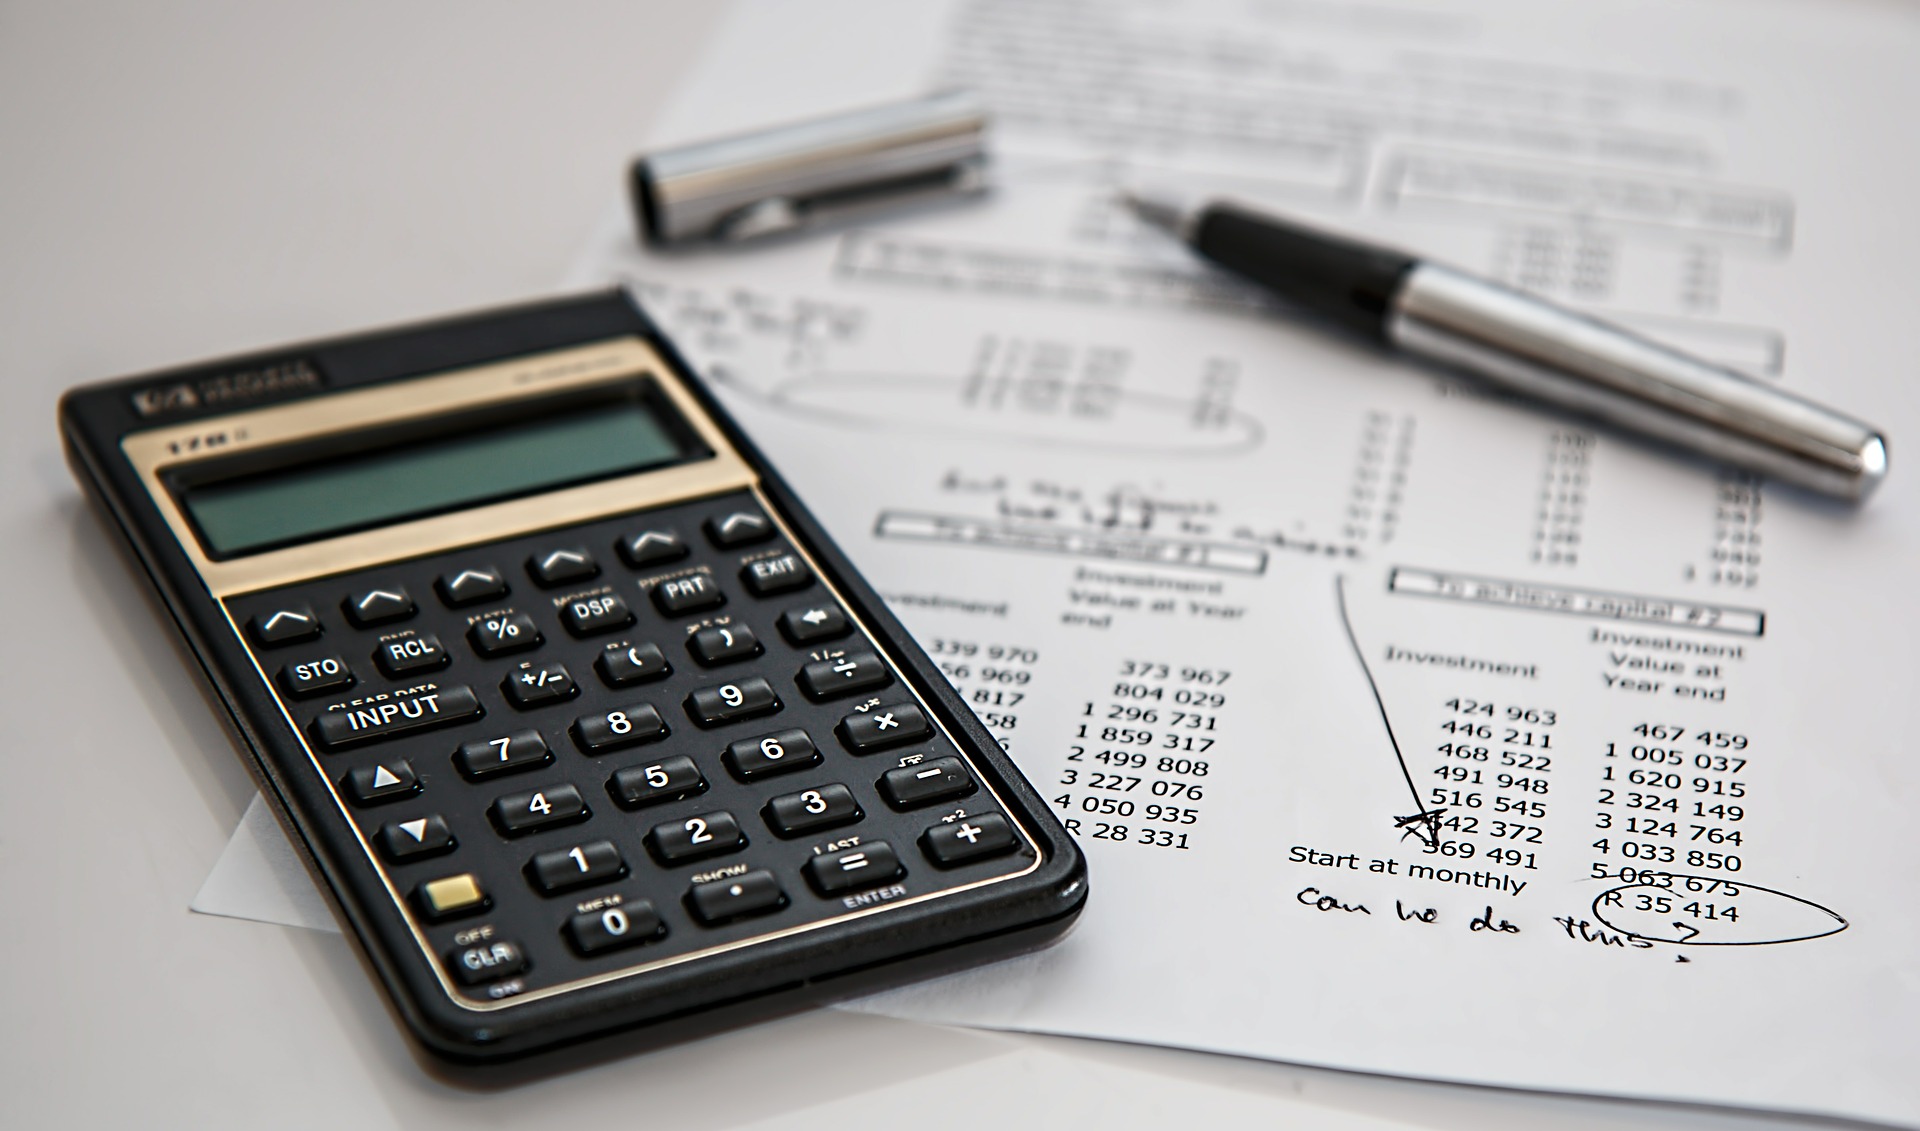 Financing receipt and calculator